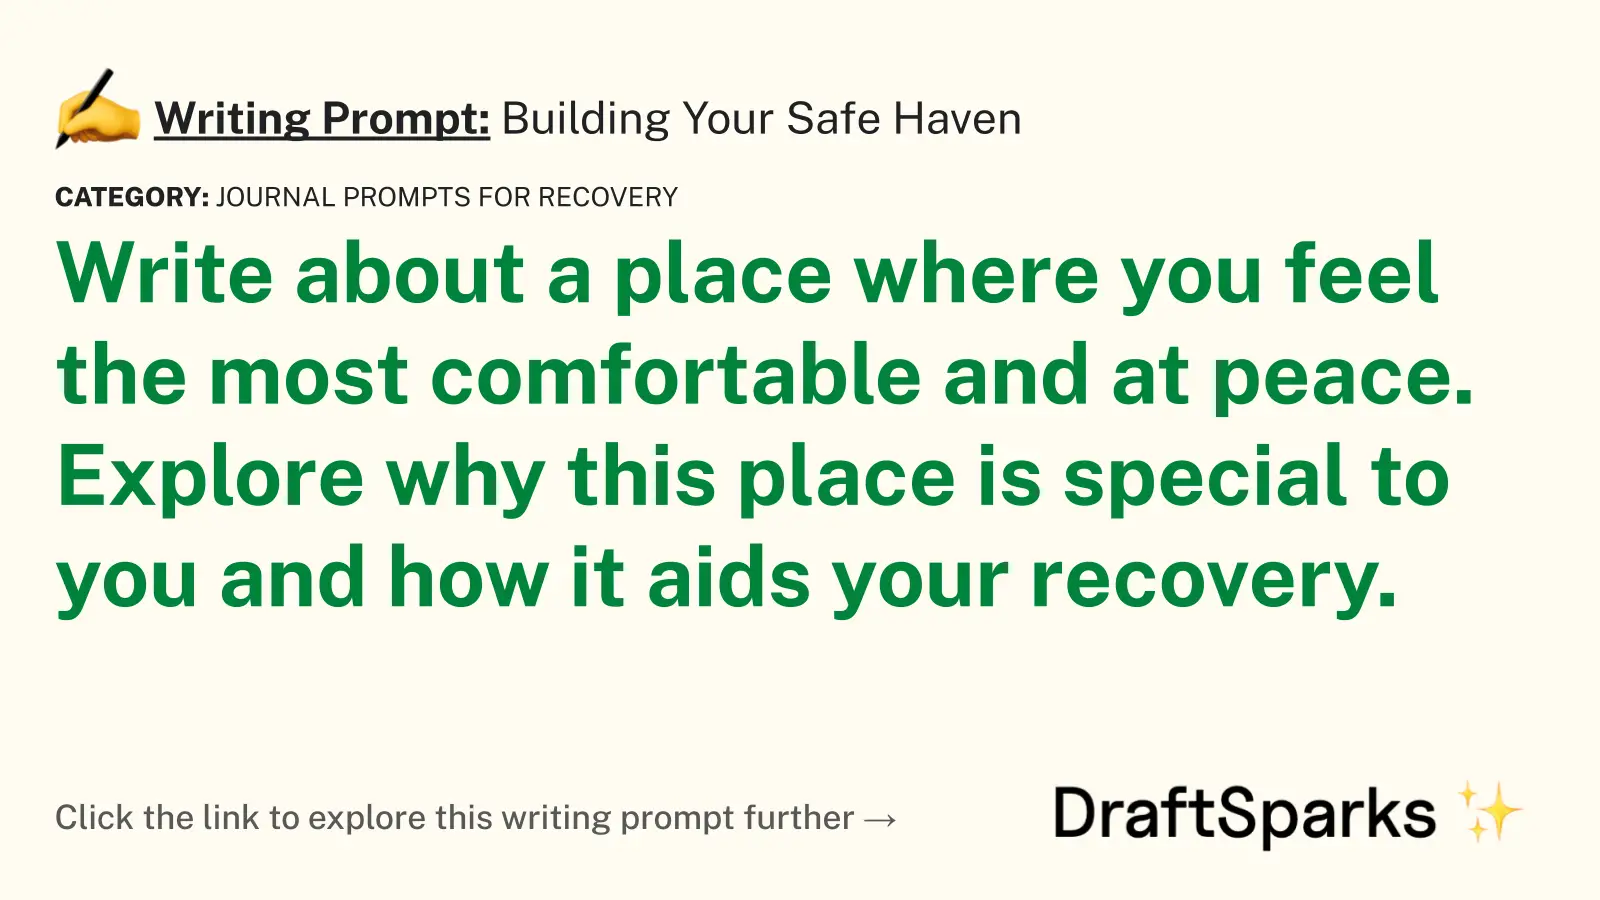 Building Your Safe Haven